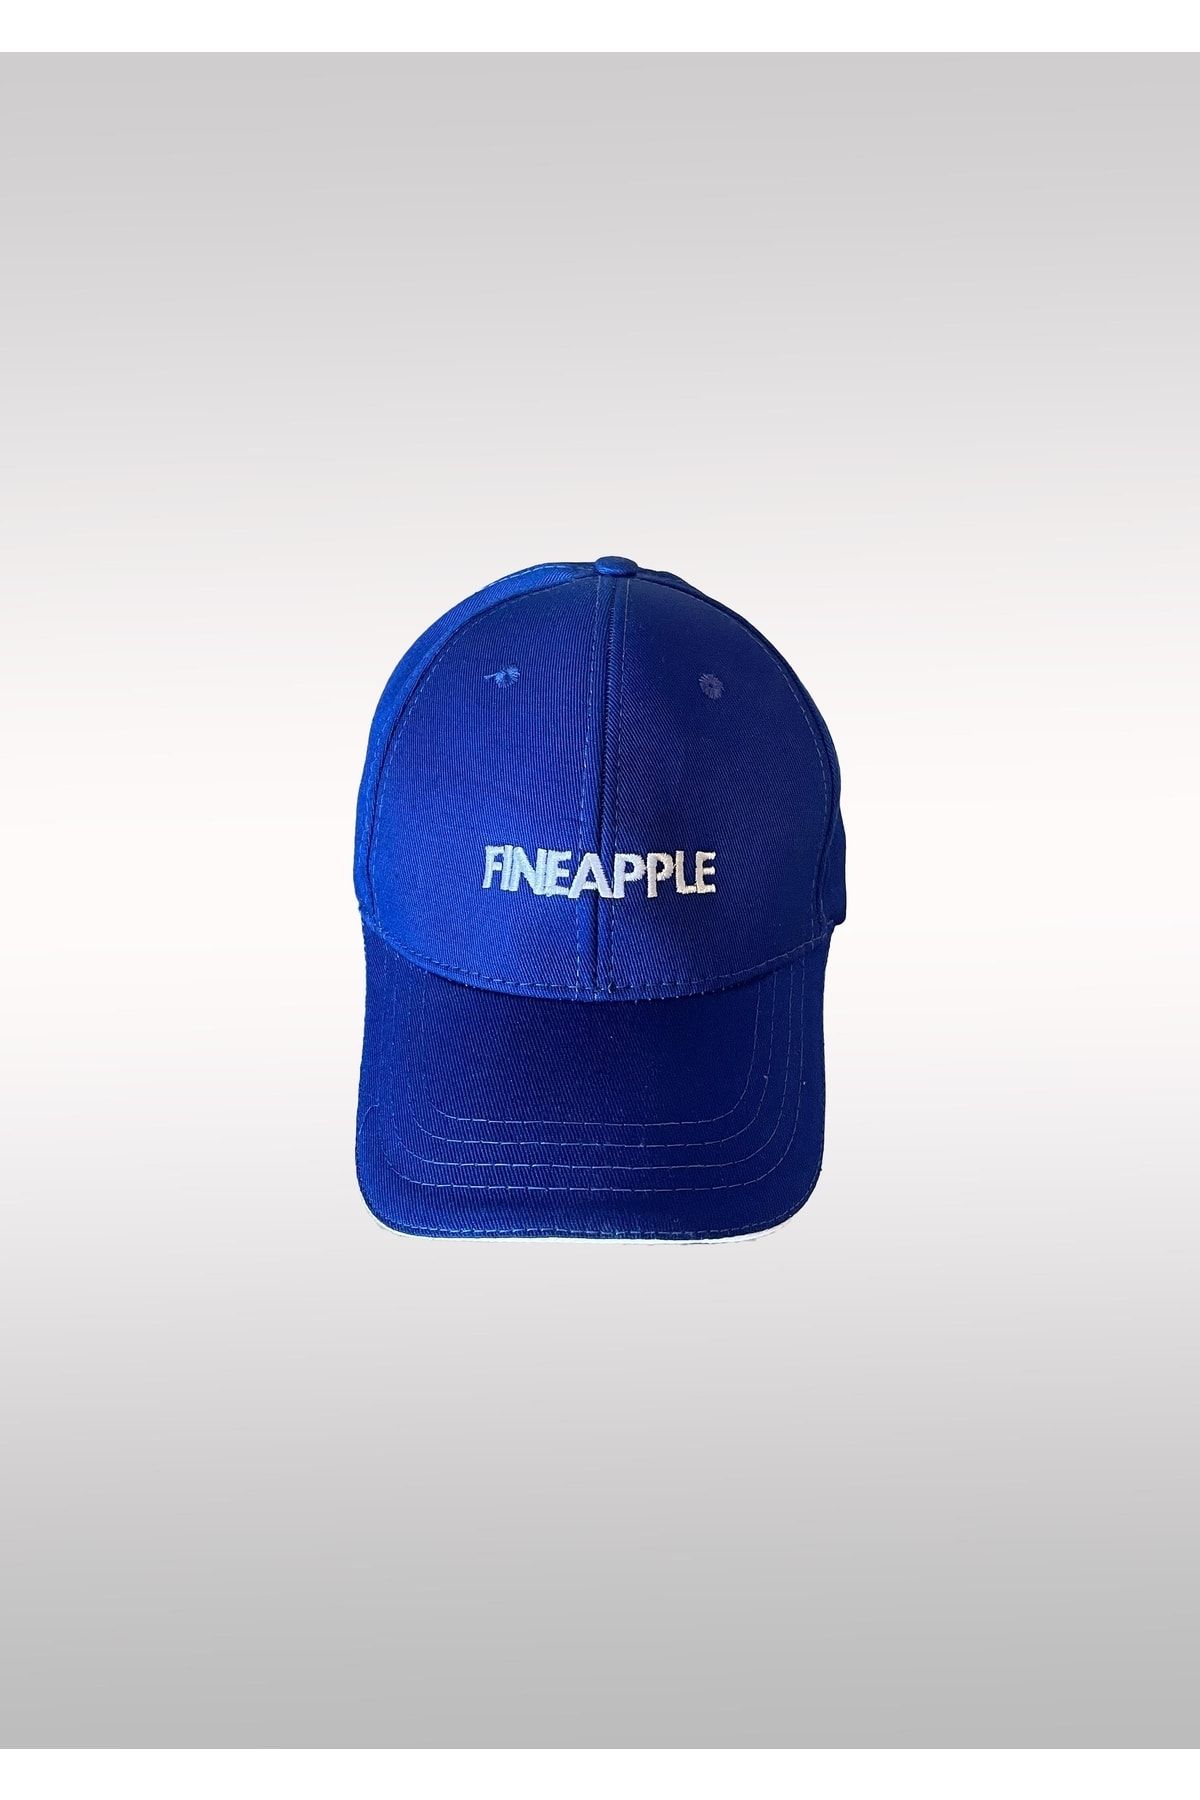 Fineapple Saks Cap